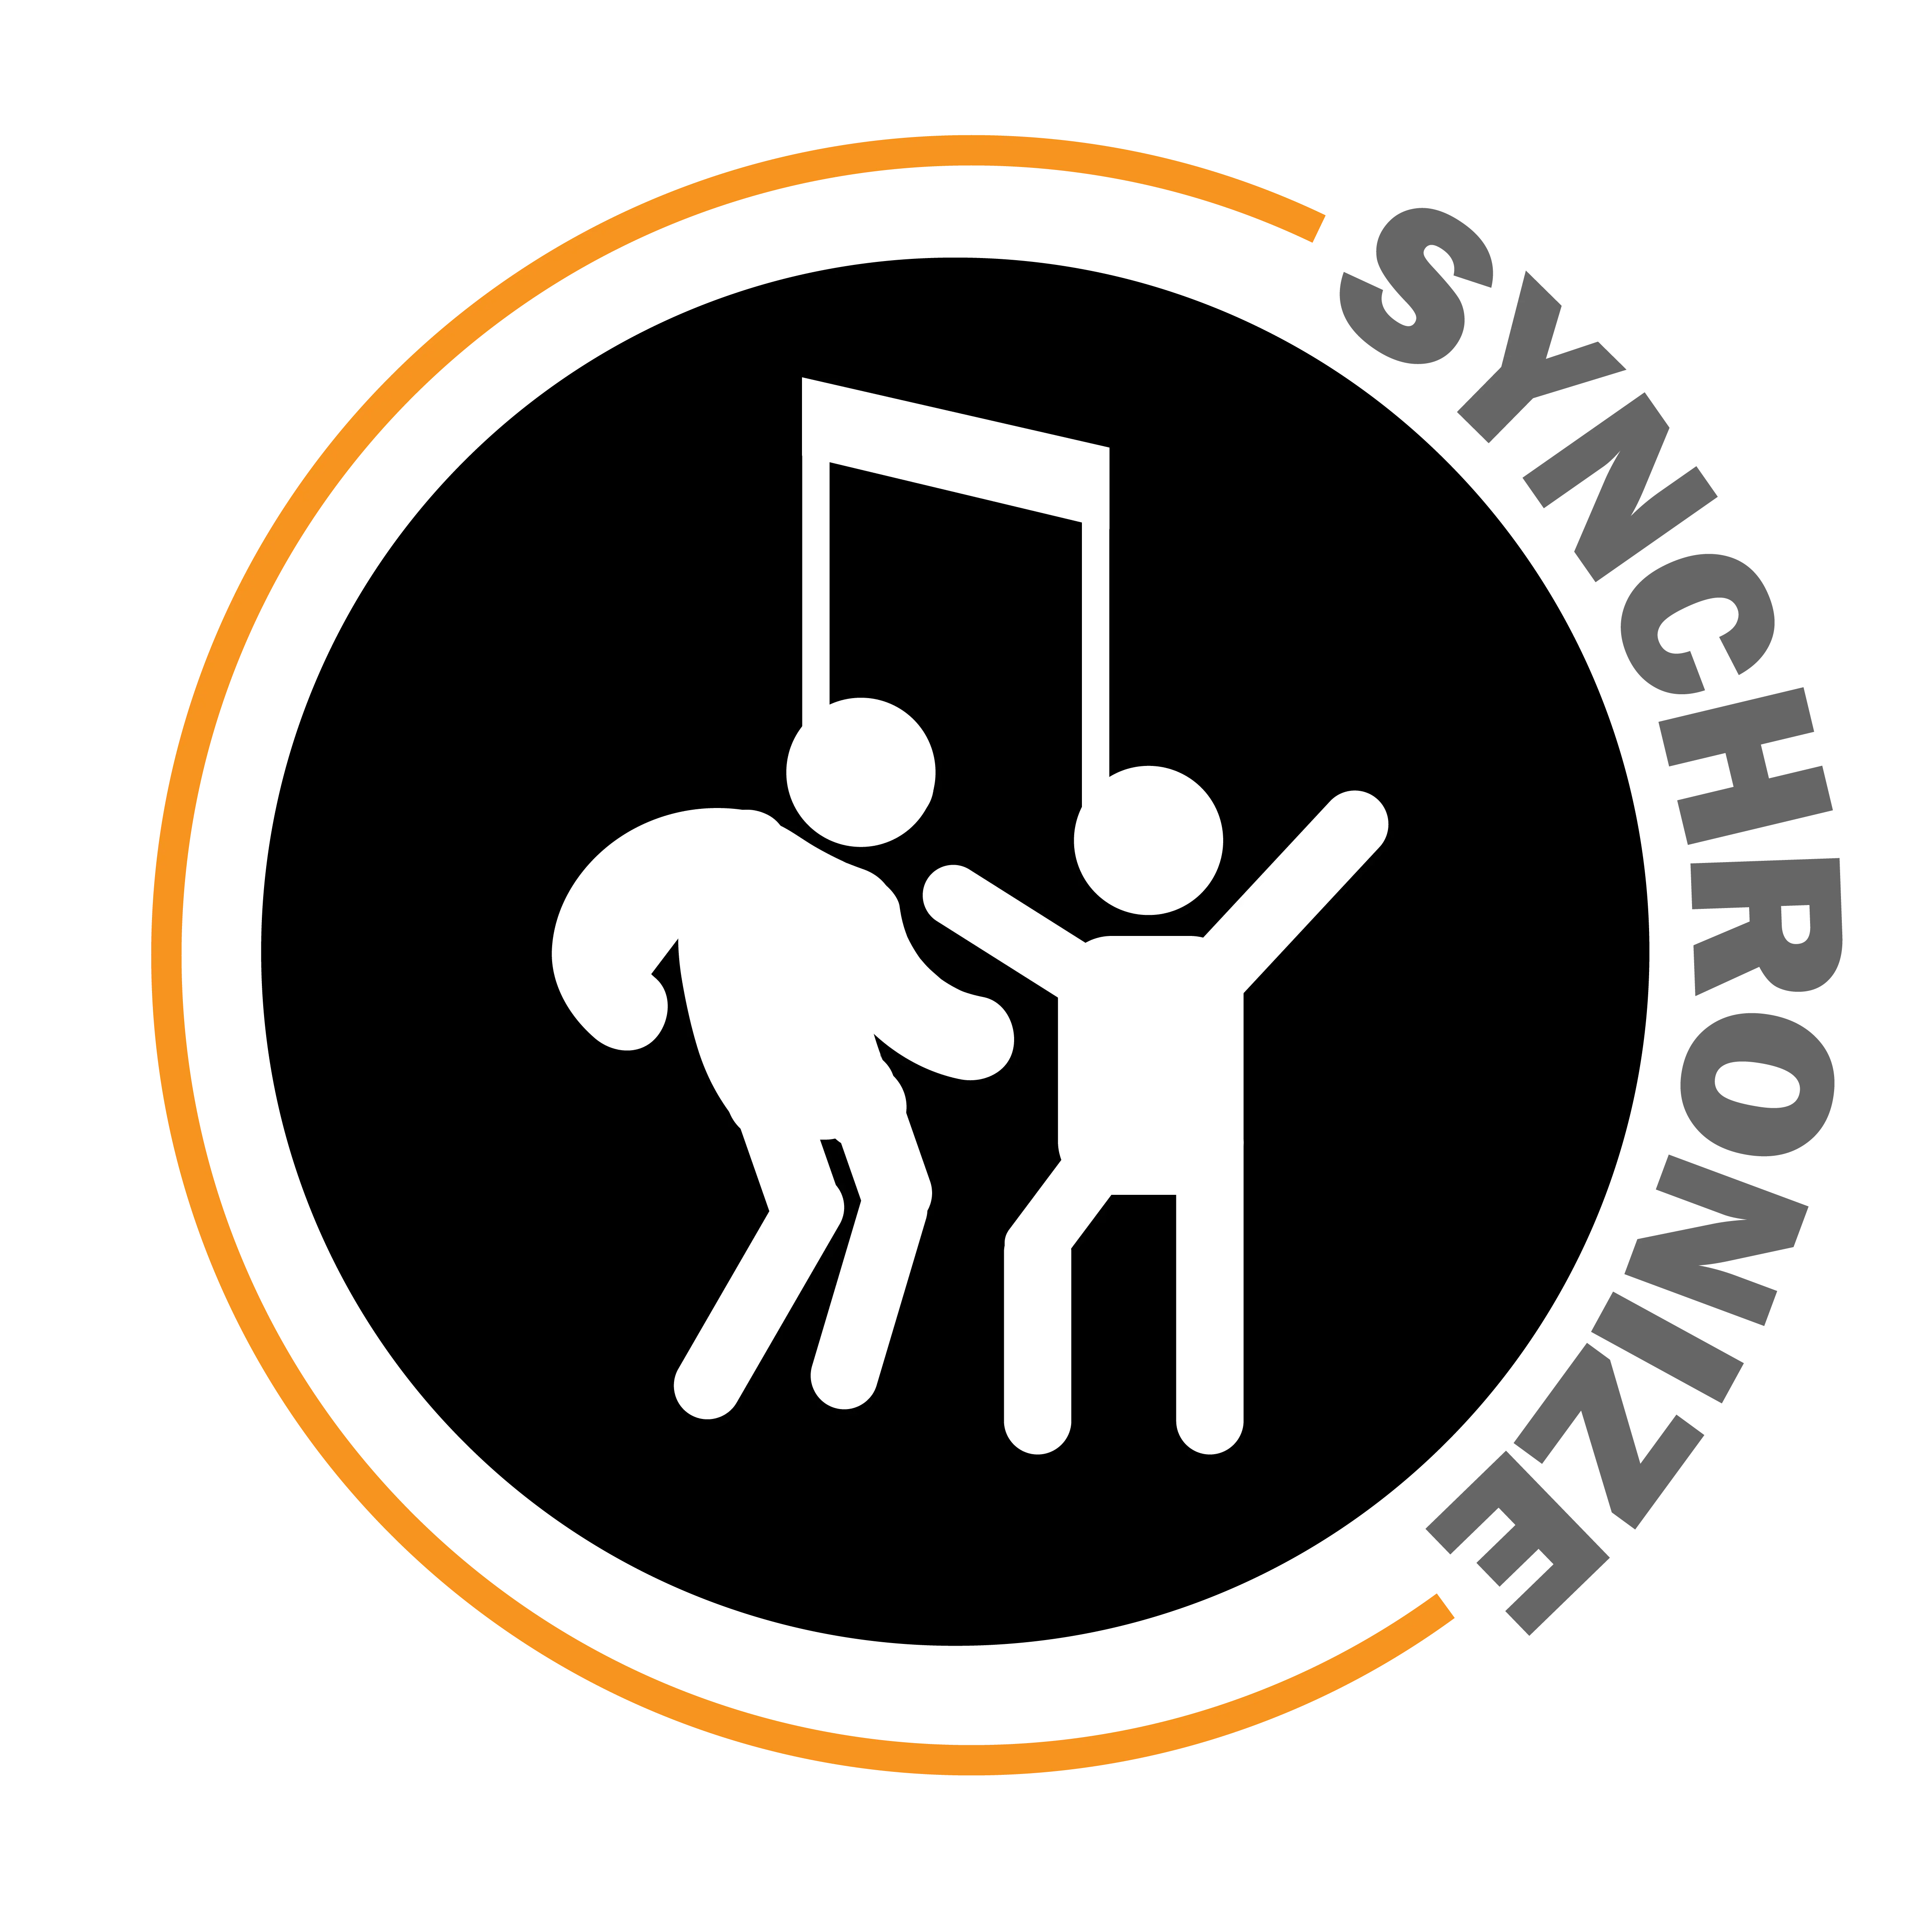 Synchronize event logo